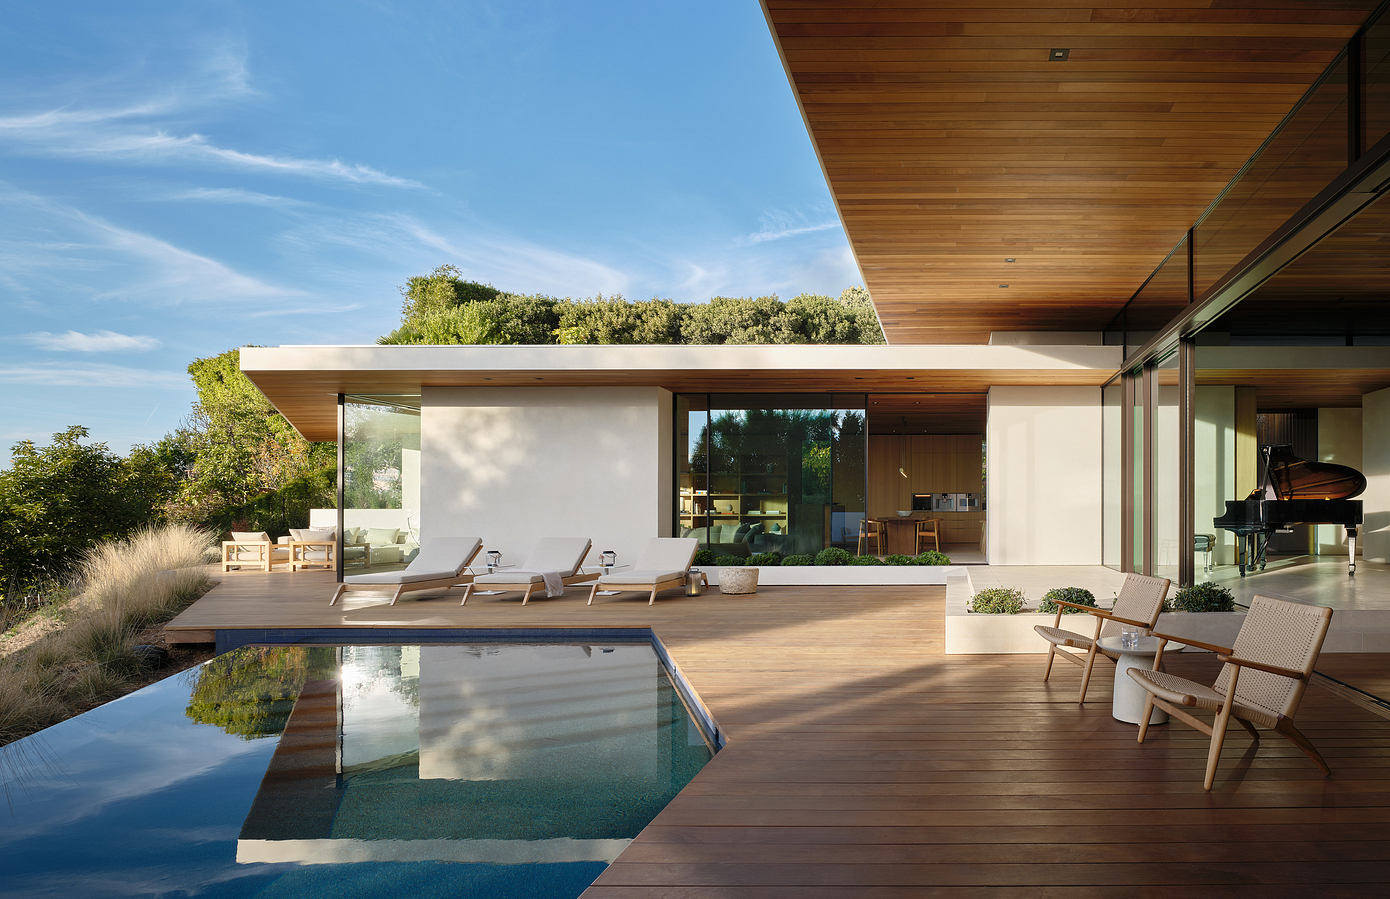 Carla Ridge Residence: Montalba Architects’ Hillside Oasis